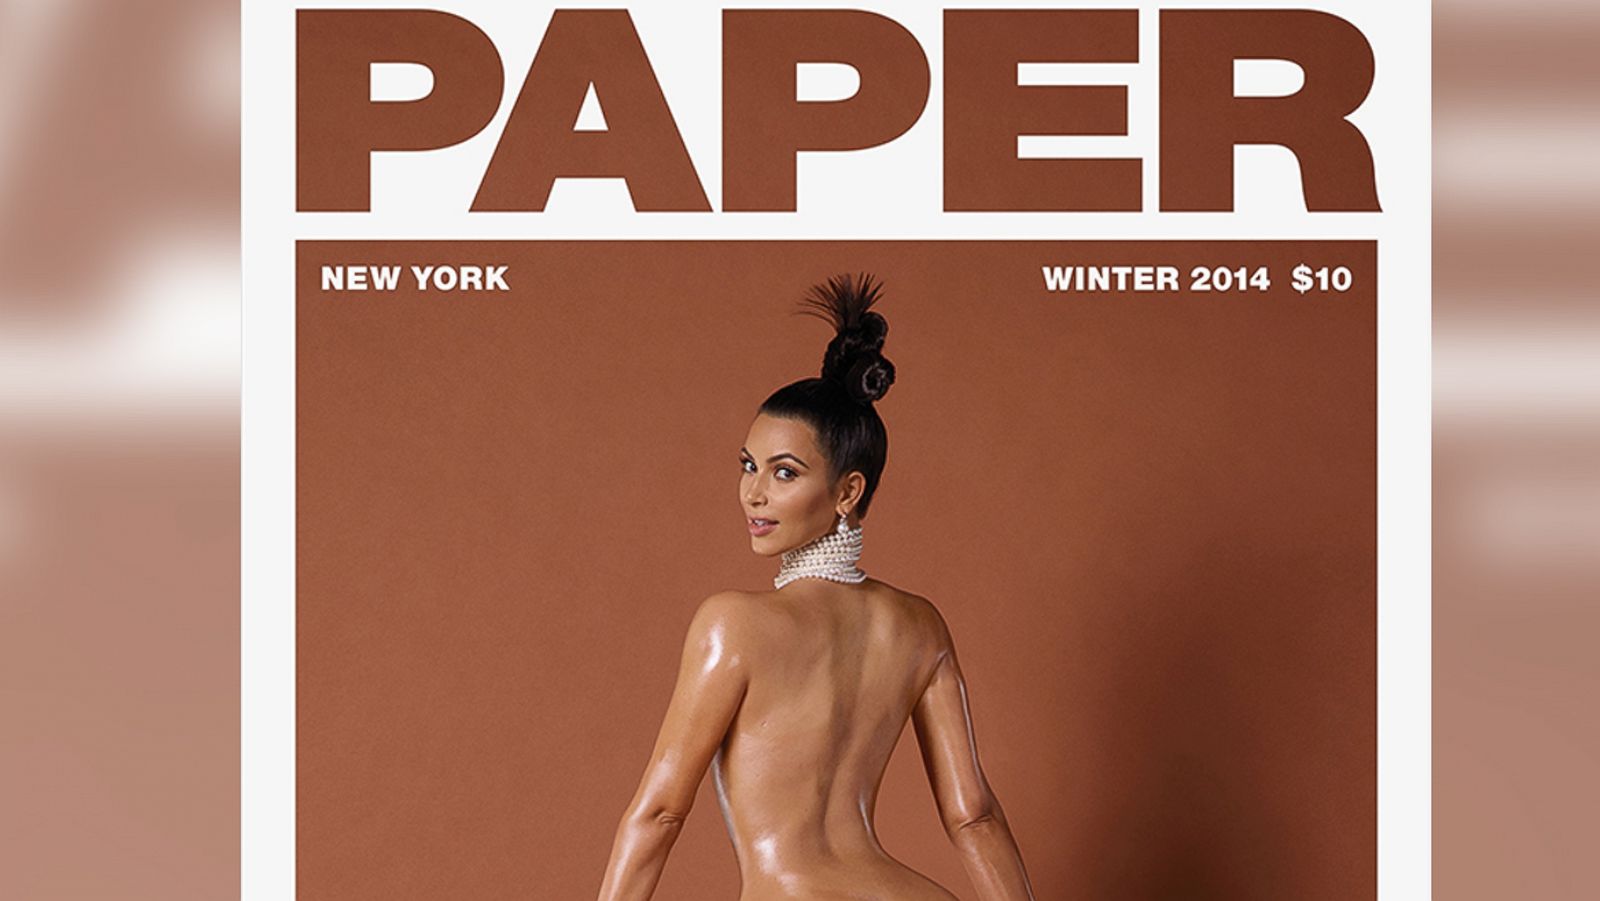 Kim Kardashan Porn Videos - Why Kim Kardashian Decided to Show Full-Frontal Nudity - ABC News